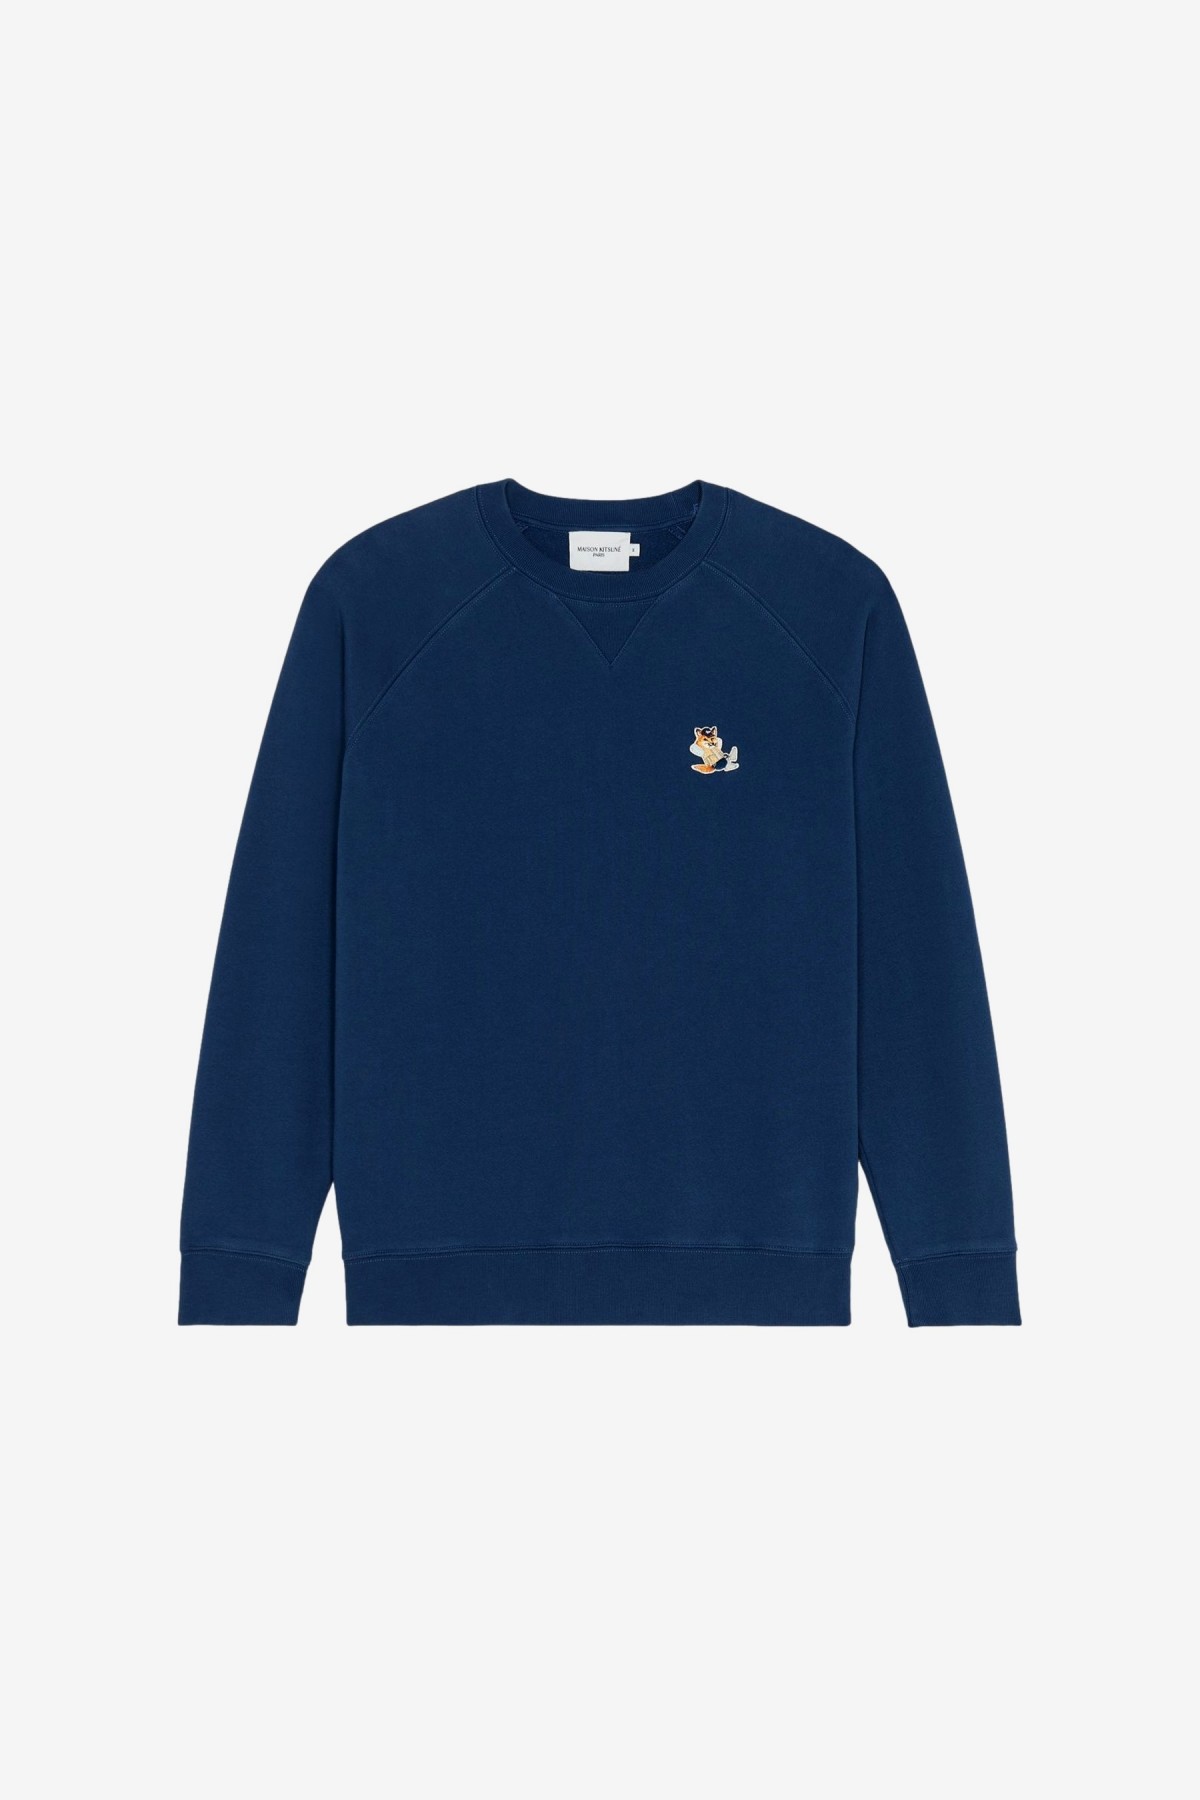 Maison Kitsuné Dressed Fox Patch Classic Sweatshirt in Blue Denim